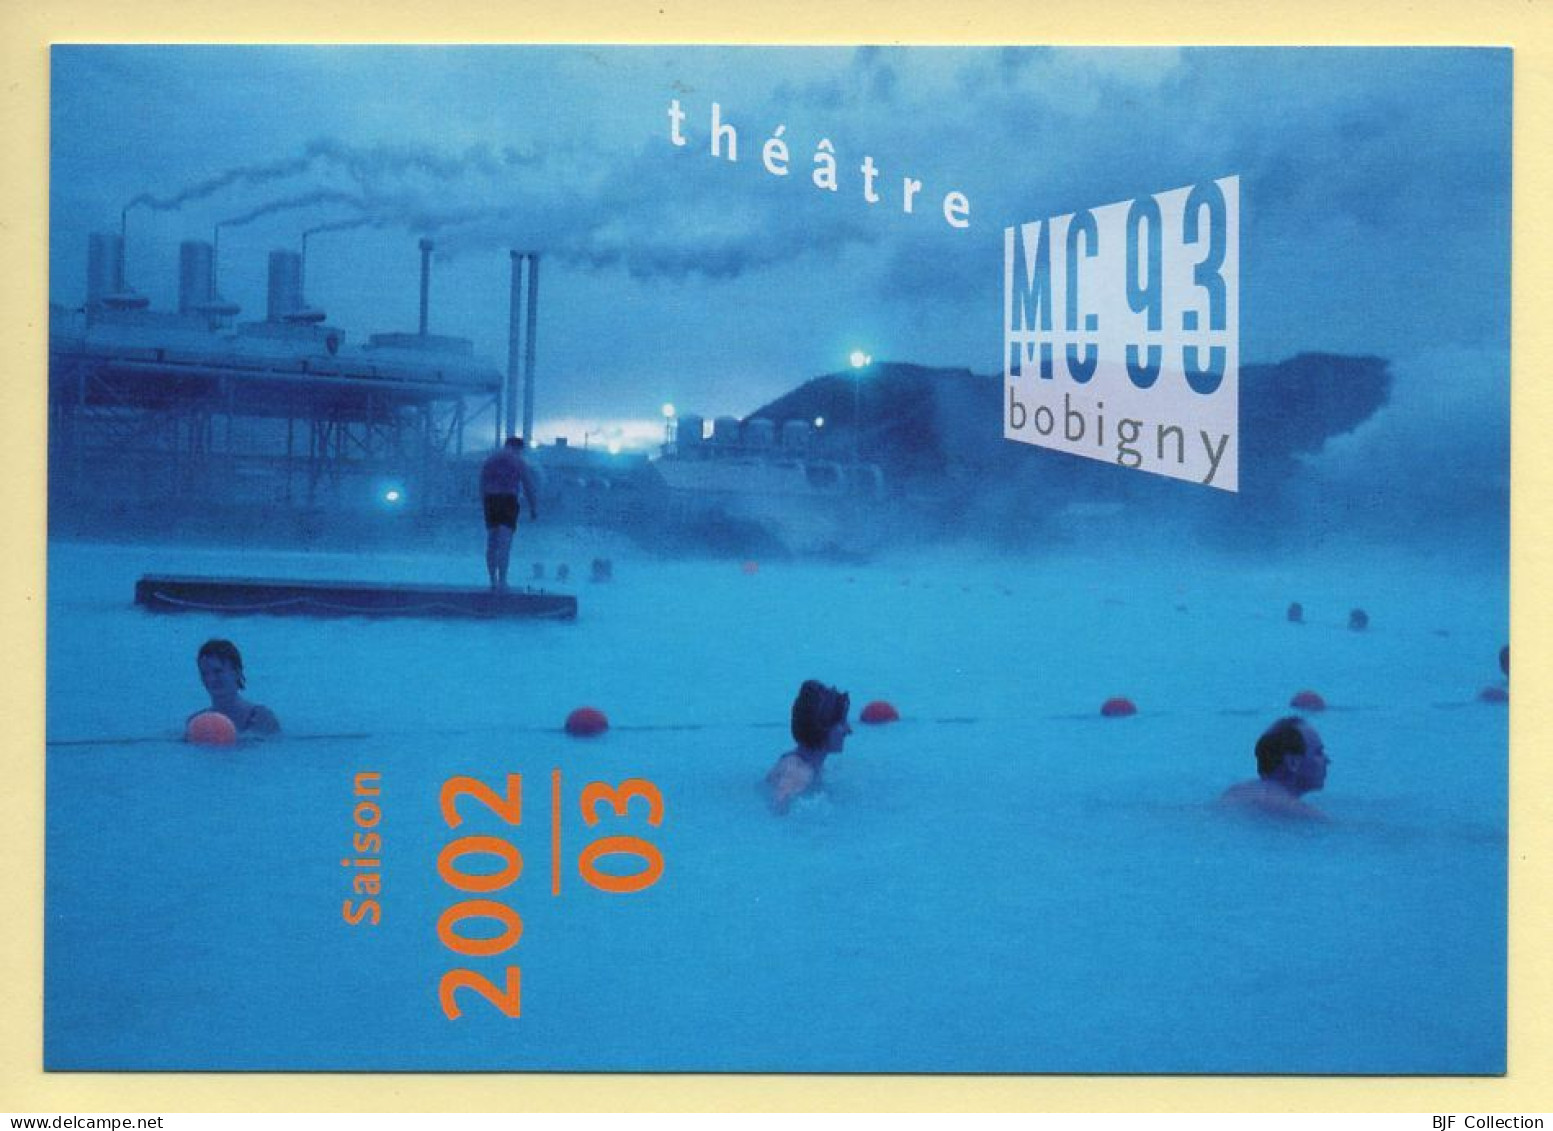 Théâtre MC93 Bobigny / Saison 2002-2003 / Théâtre - Théâtre